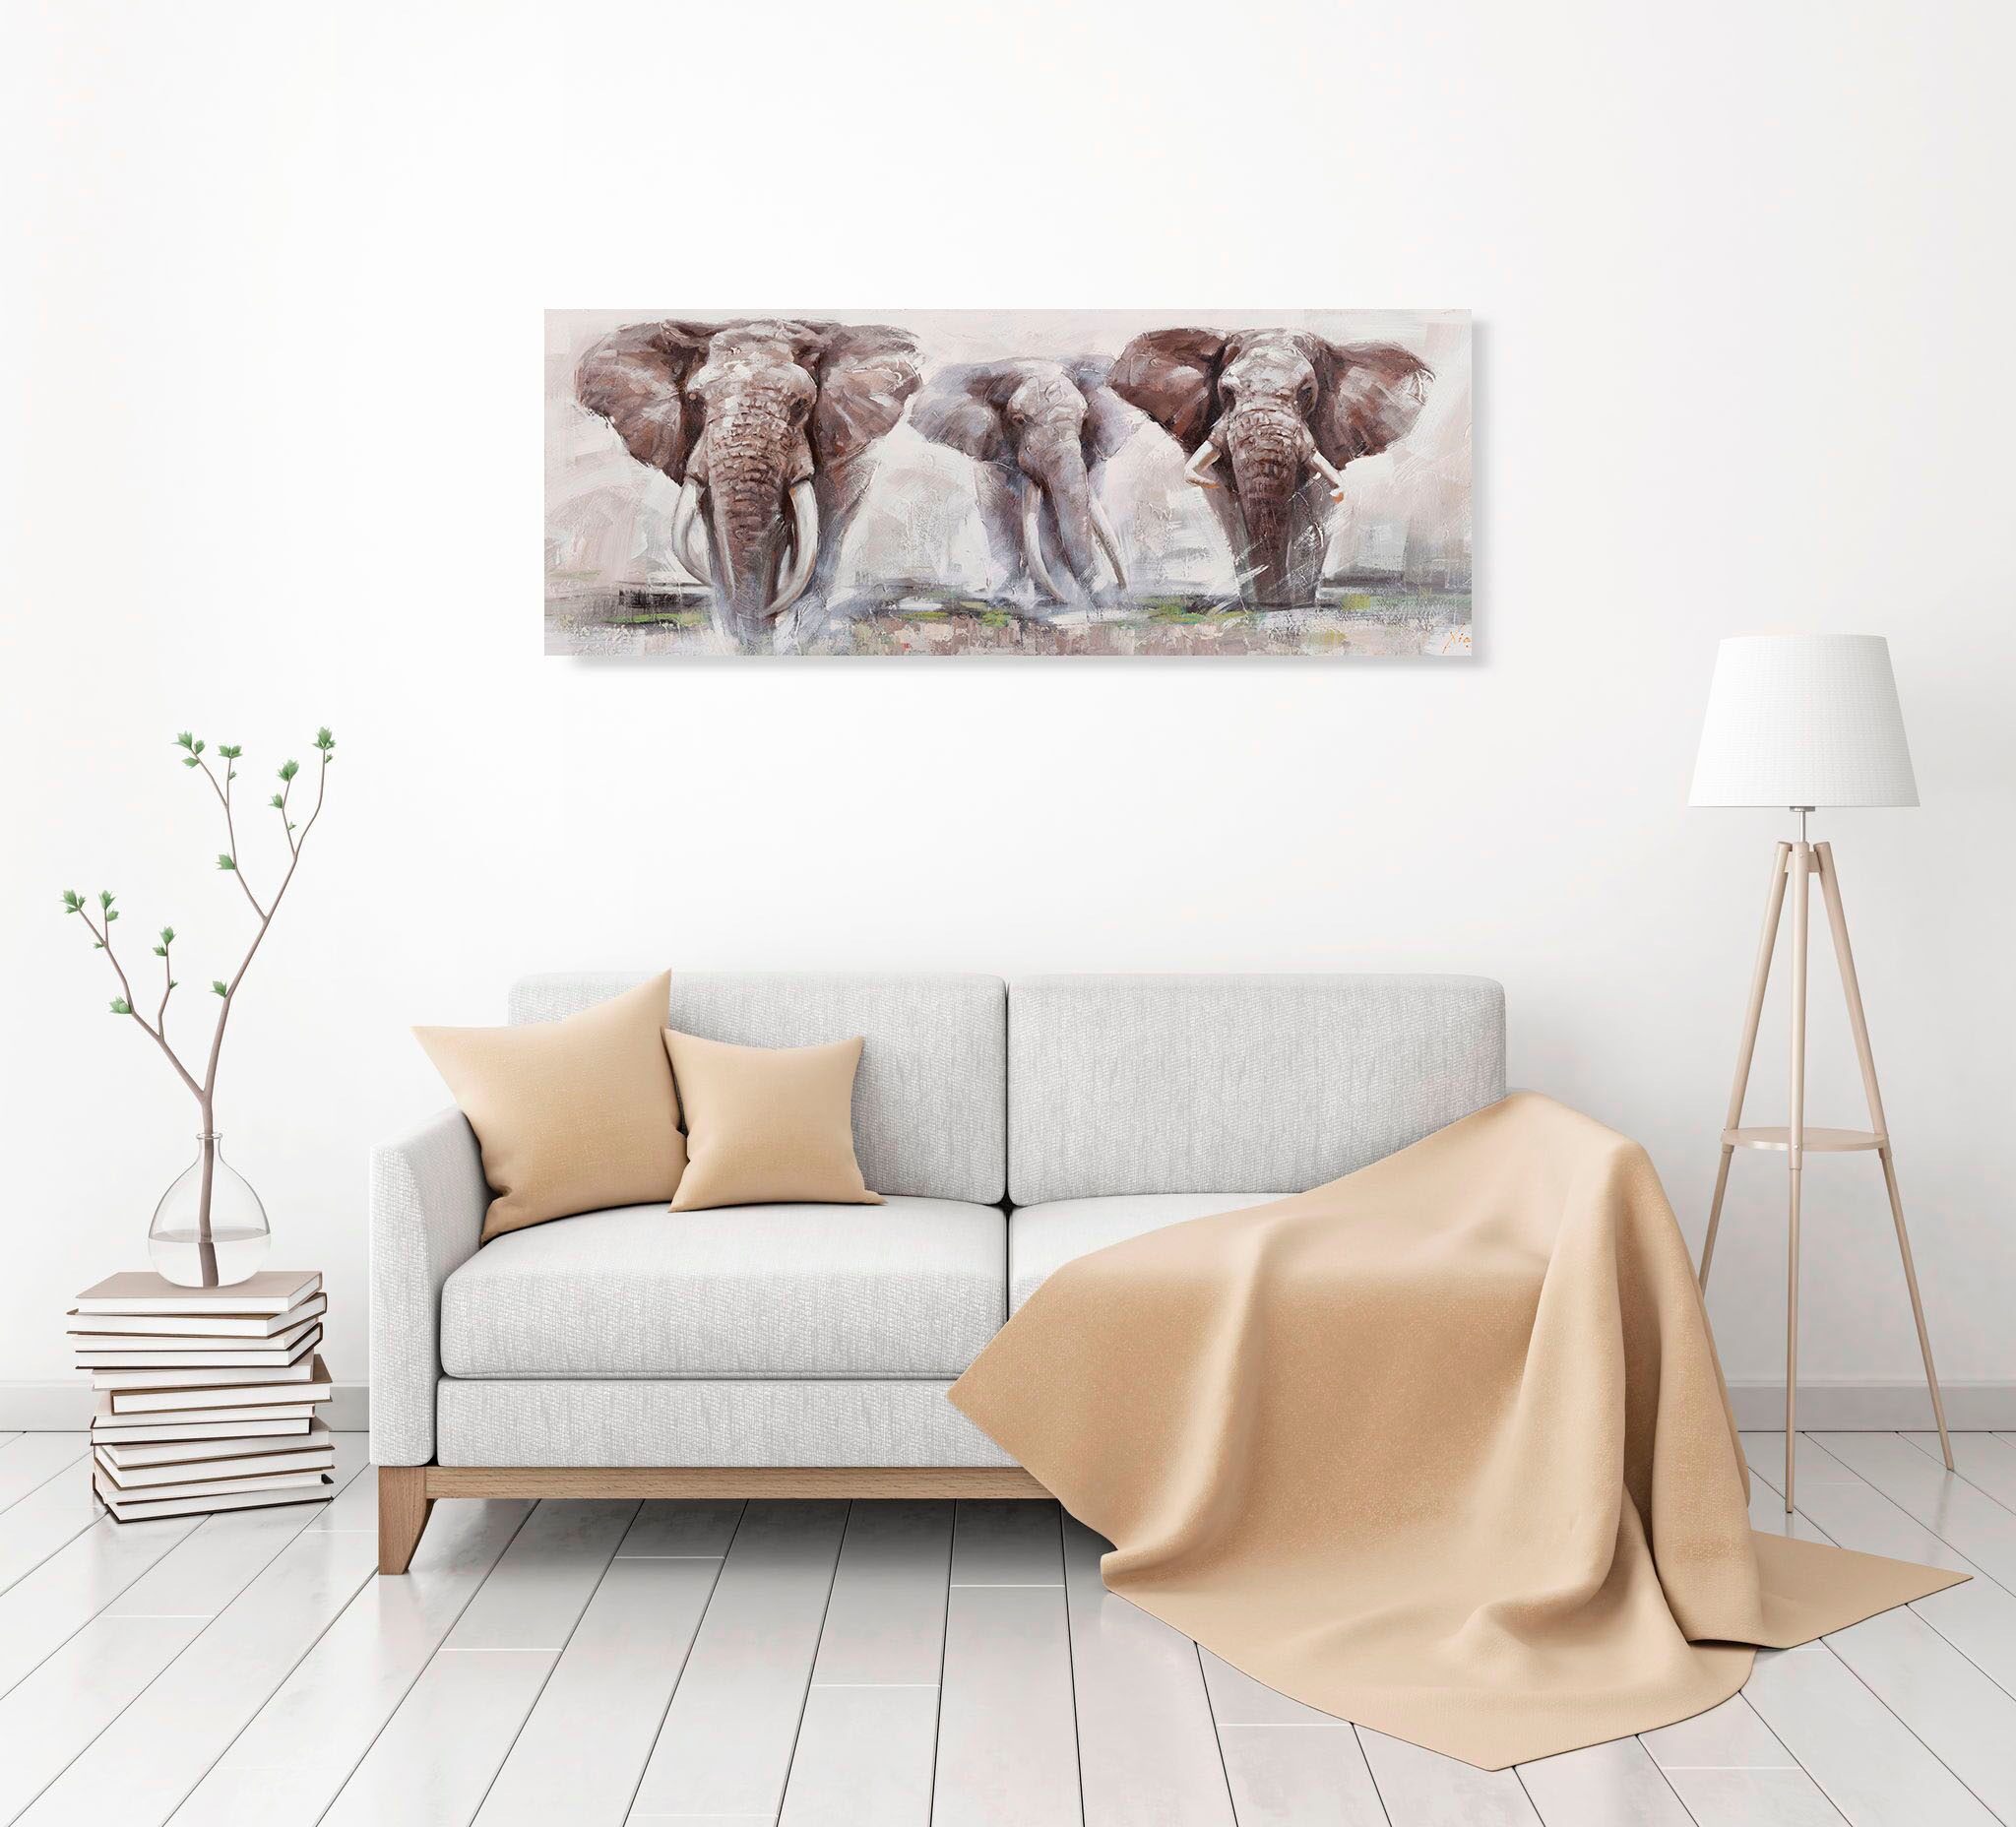 Home affaire Ölbild »Elephant«, Elefanten-Tiere